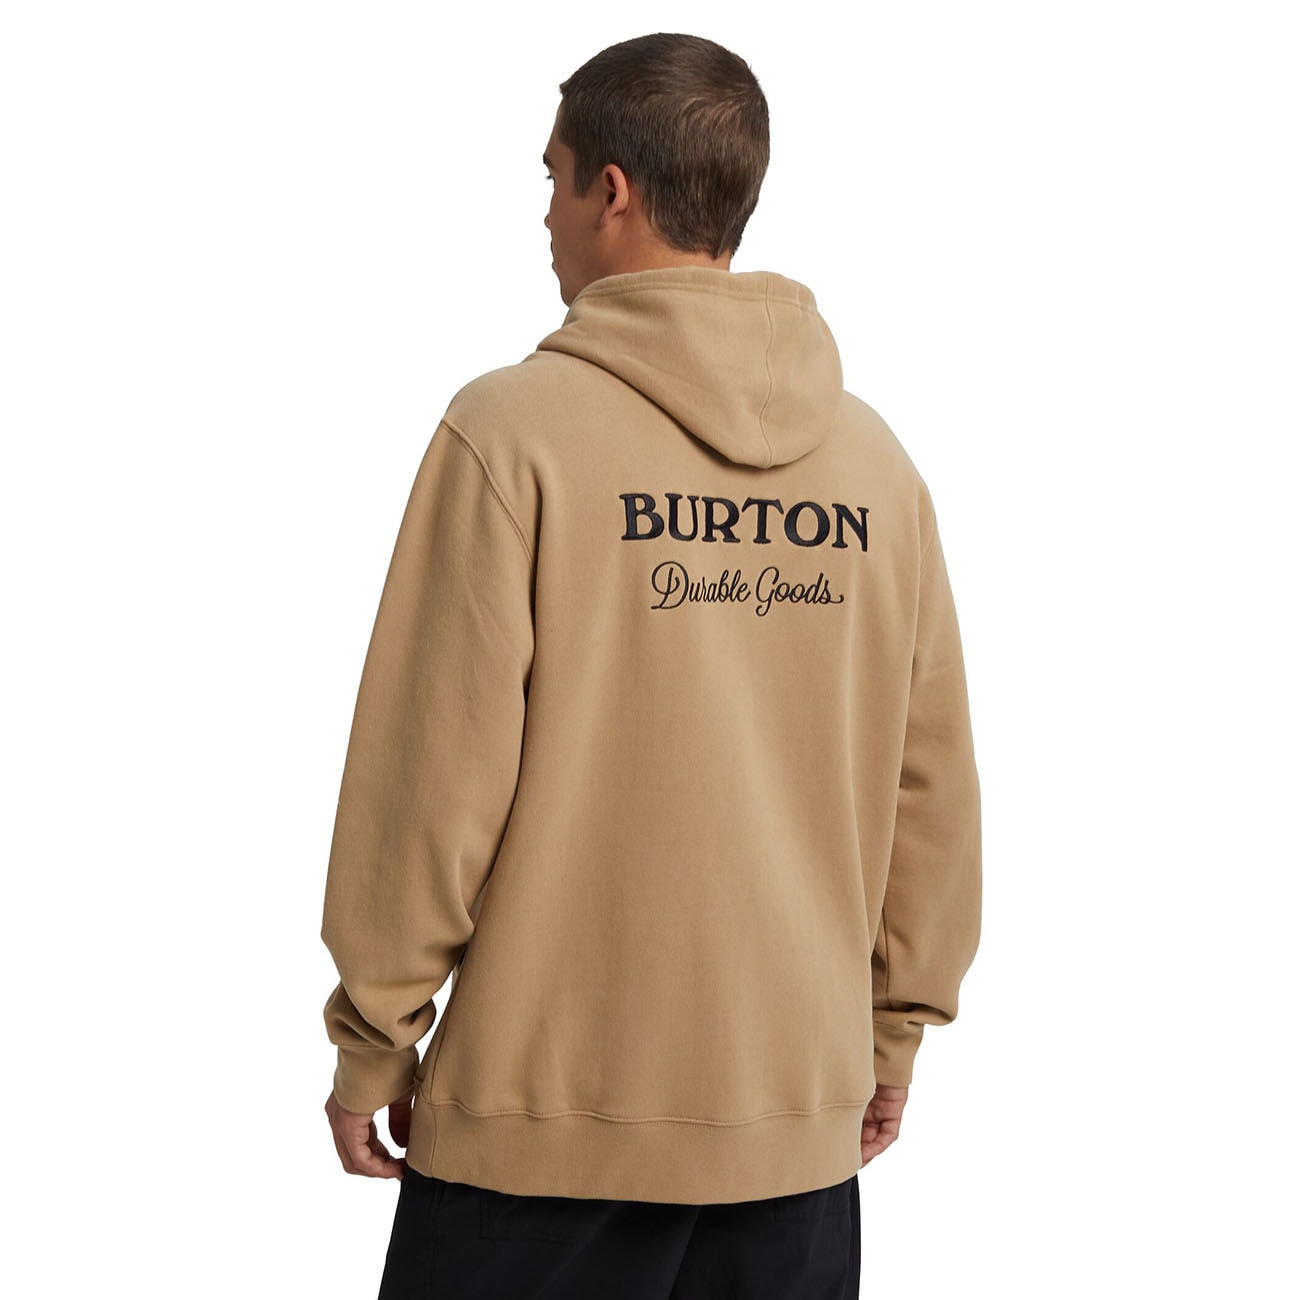 Burton Durable Goods Pullover 